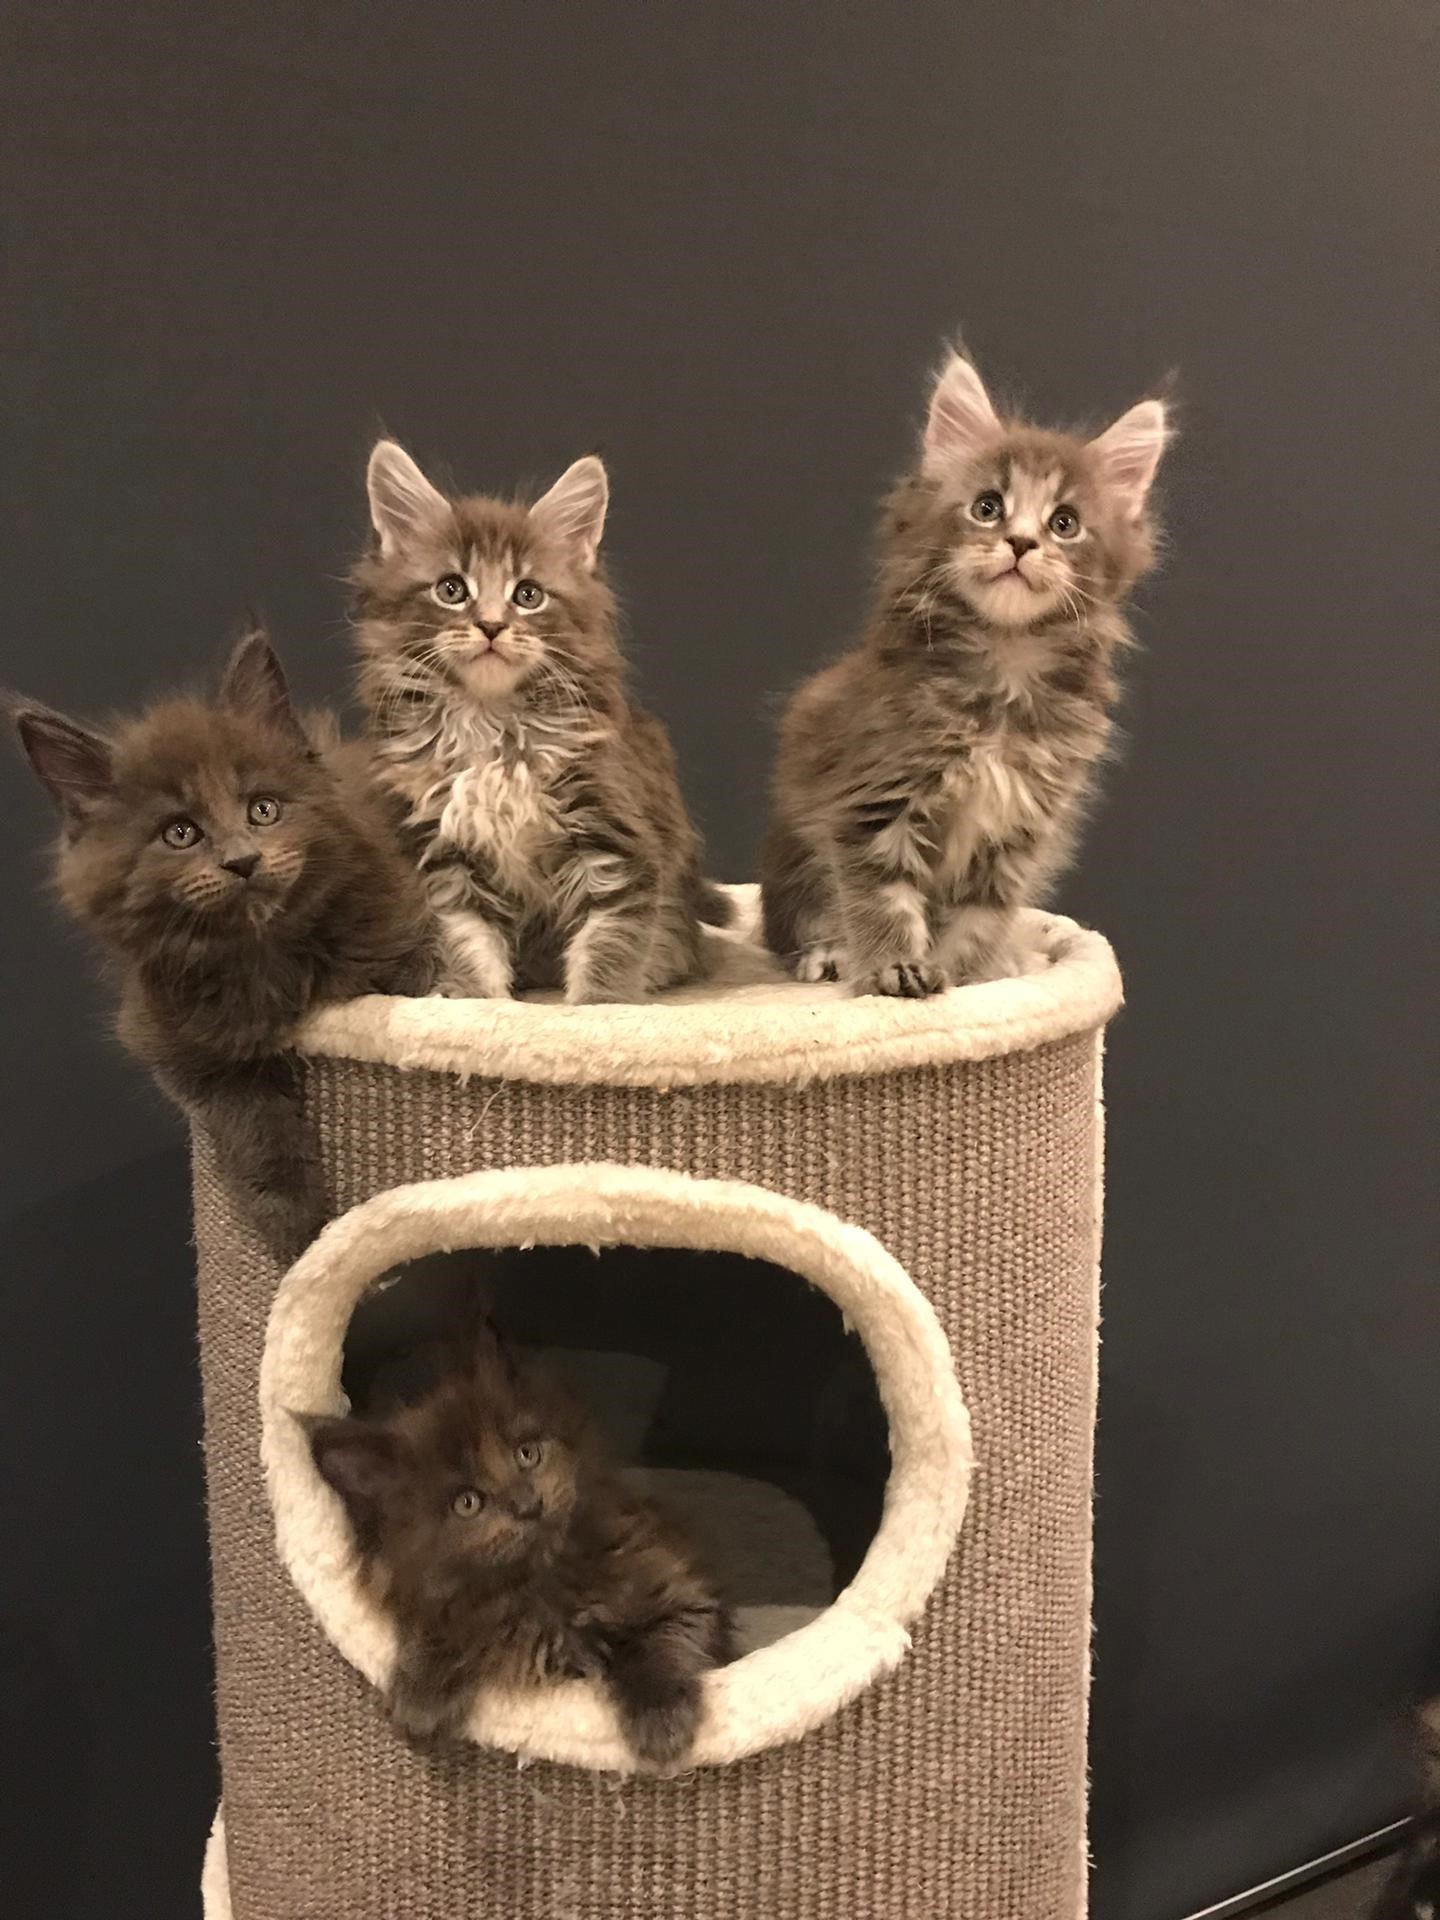 https://www.shiraco.be/wp-content/uploads/2020/04/Kittens.jpg